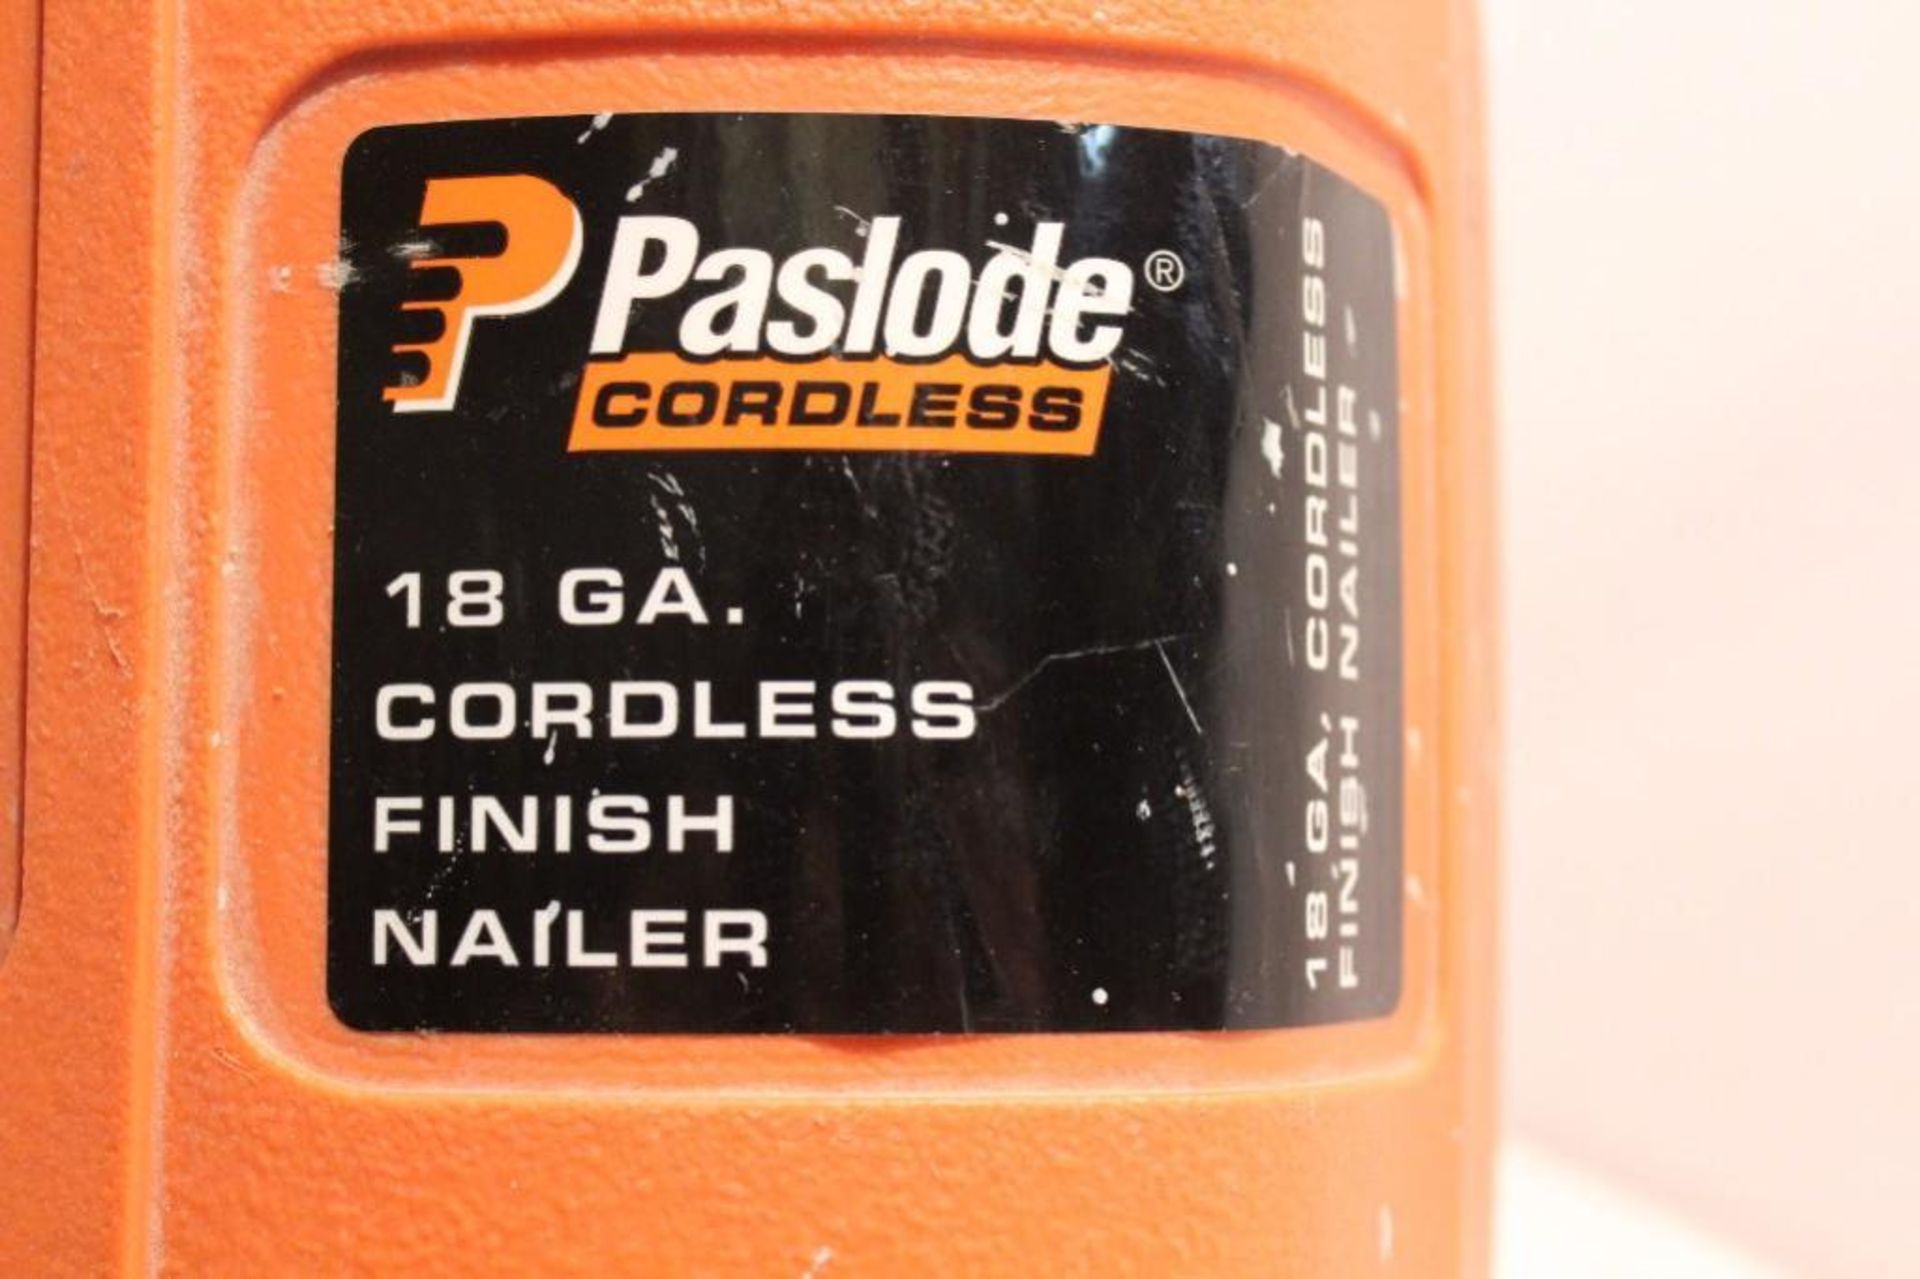 Paslode 18 gauge cordless finish nailer PartNo.901000 - Image 4 of 6